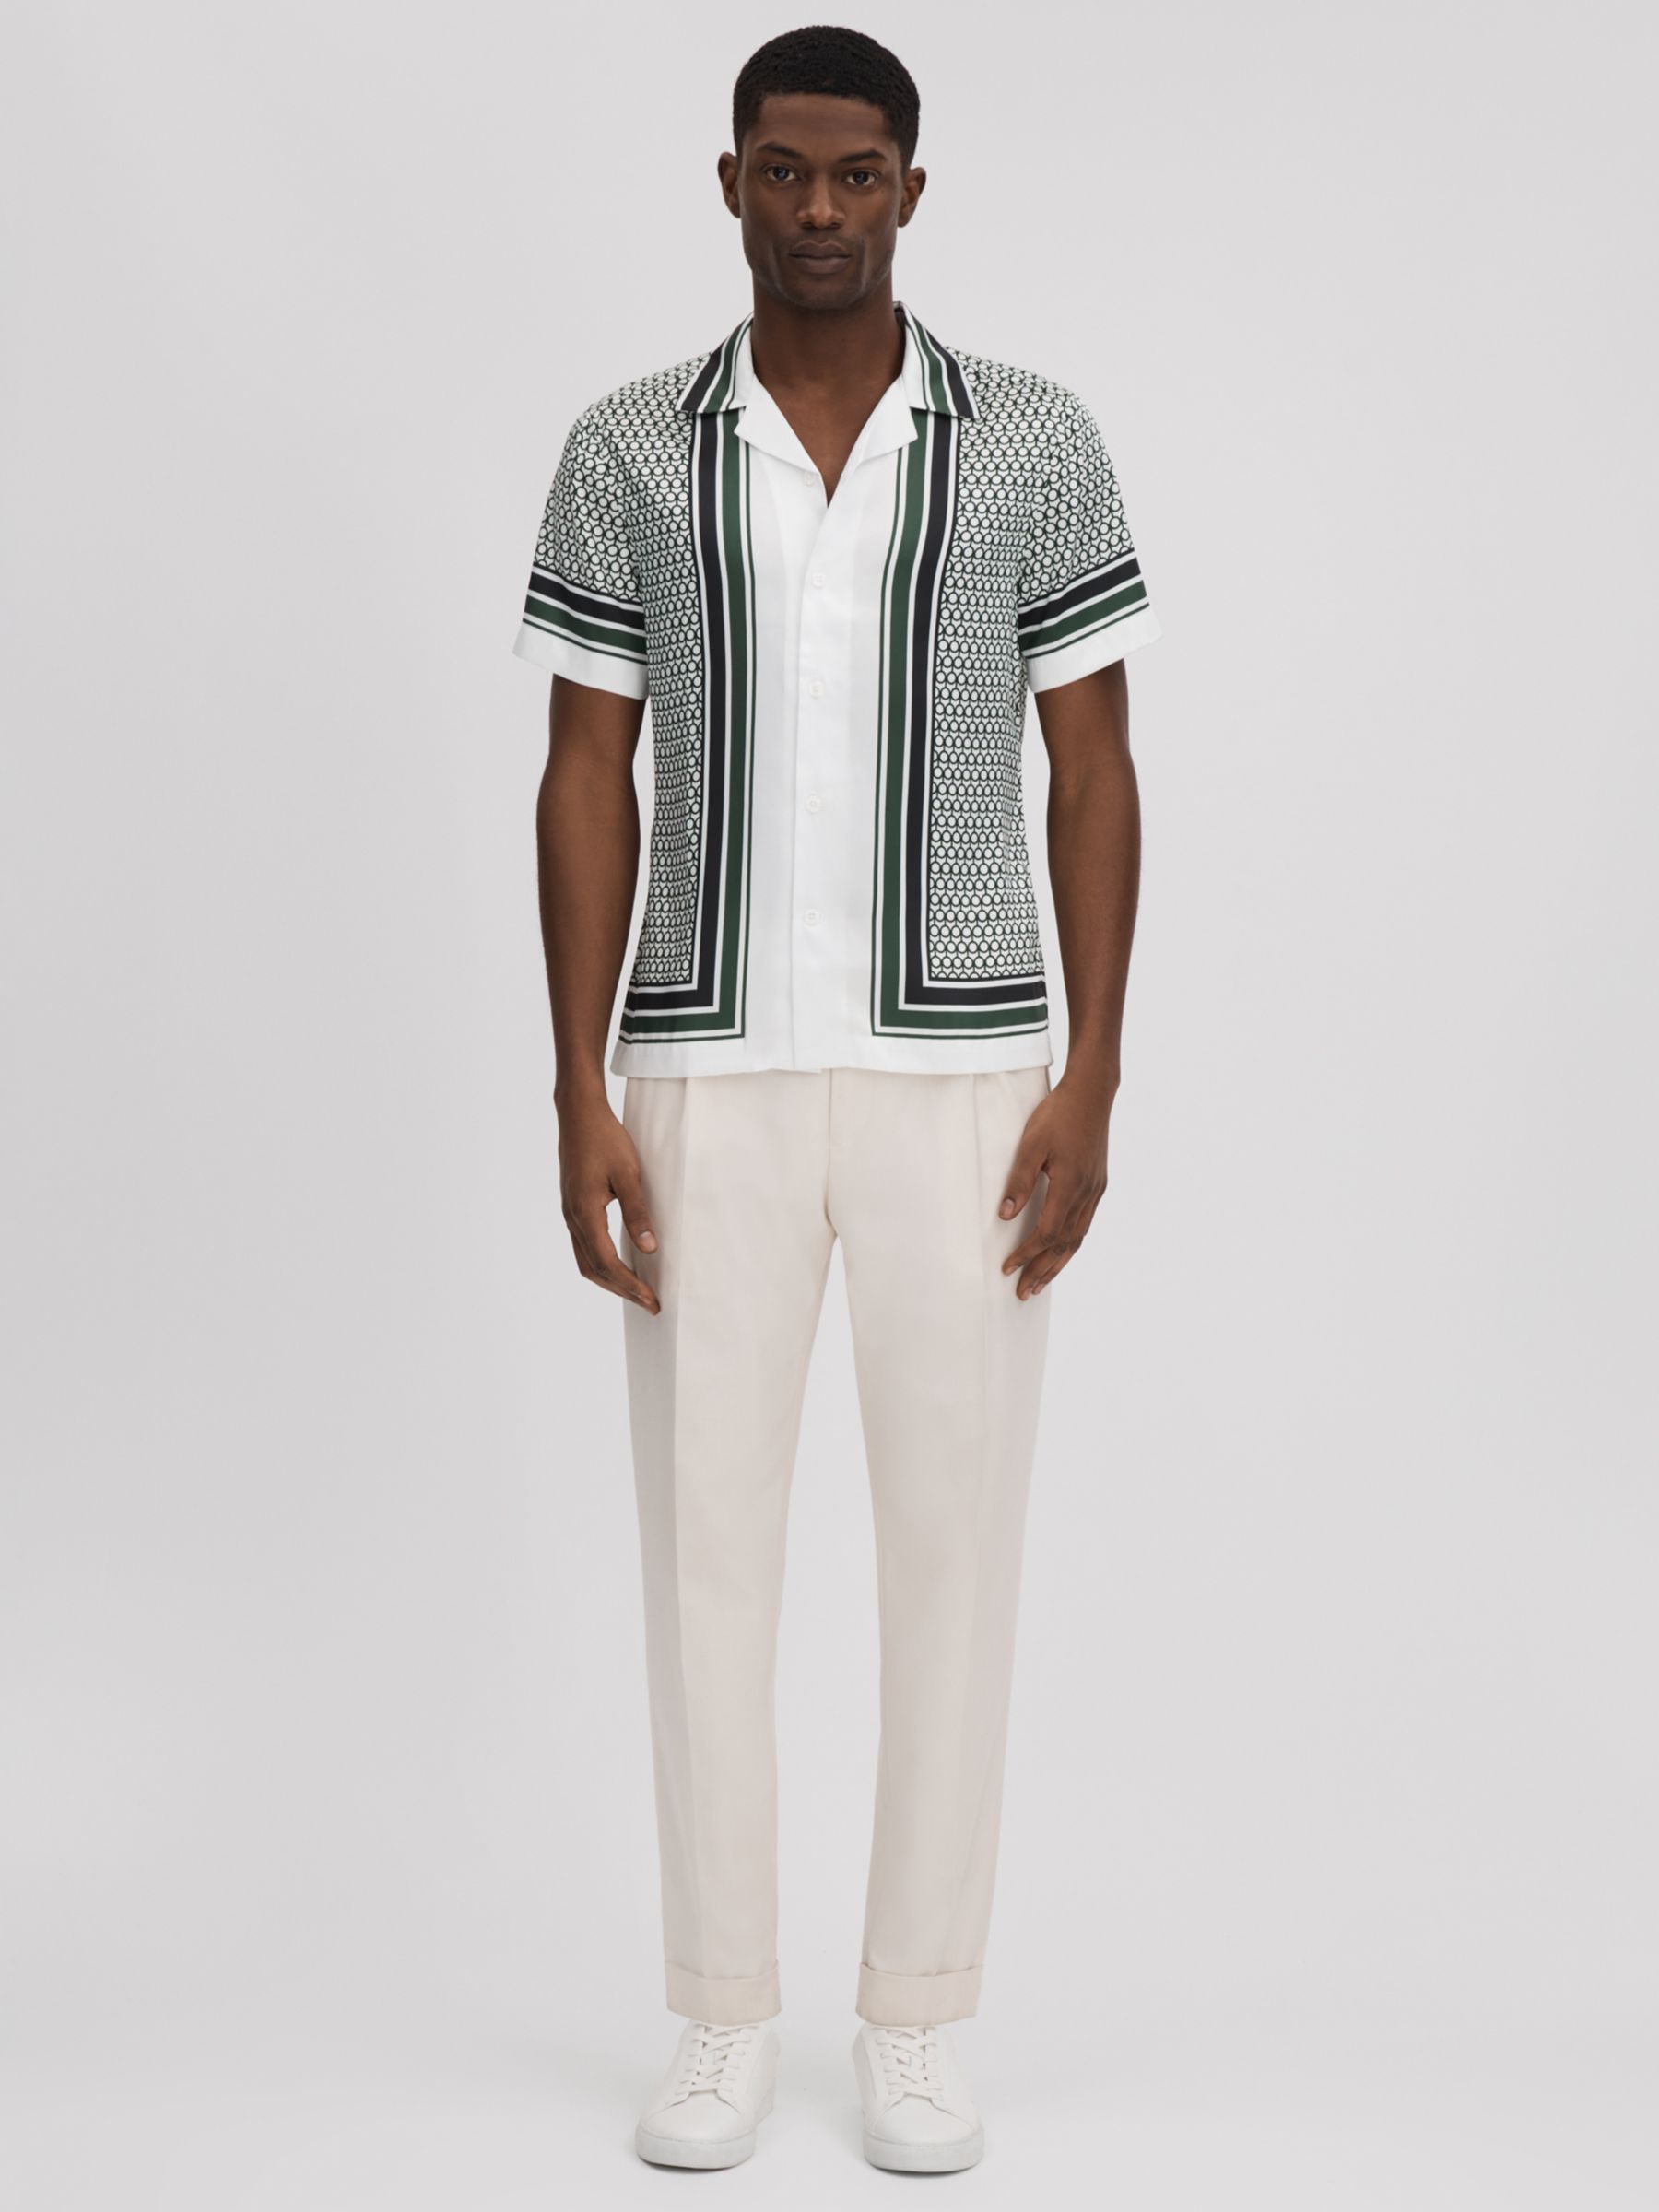 Reiss Blair Geometric and Stripe Print Shirt, White/Green, XS